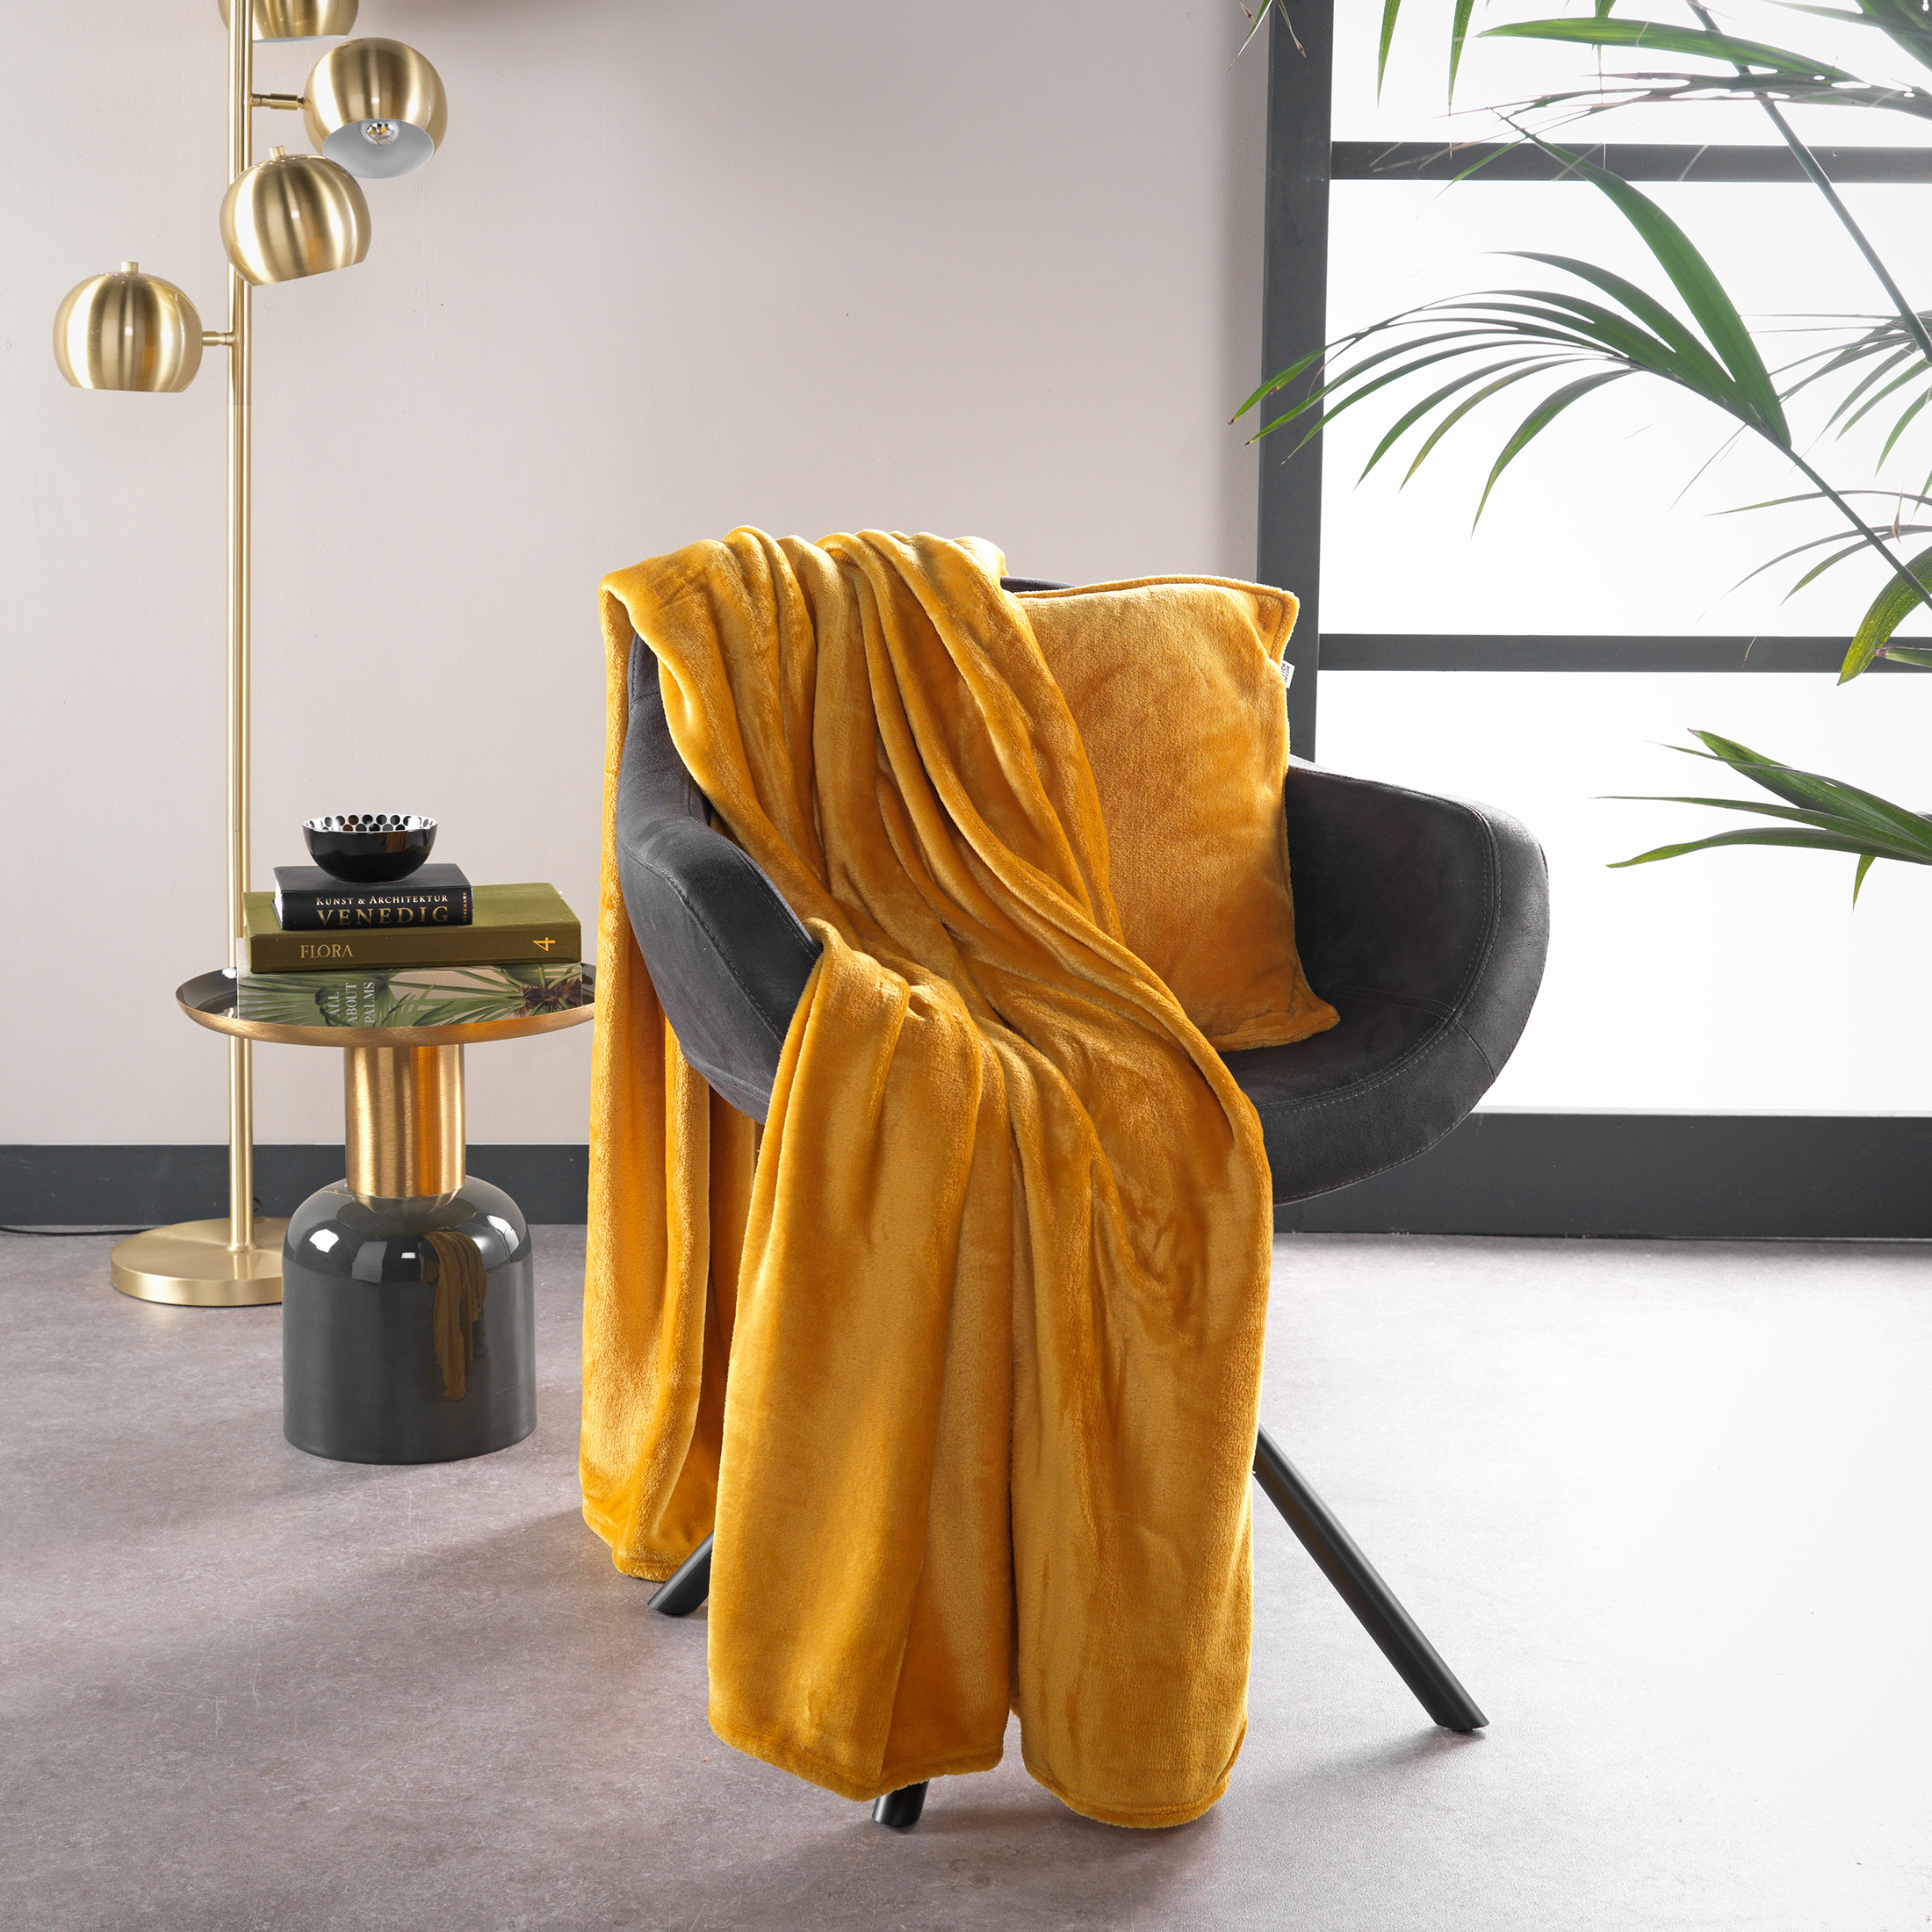 BILLY - Plaid flannel fleece 150x200 cm - Golden Glow - geel - superzacht